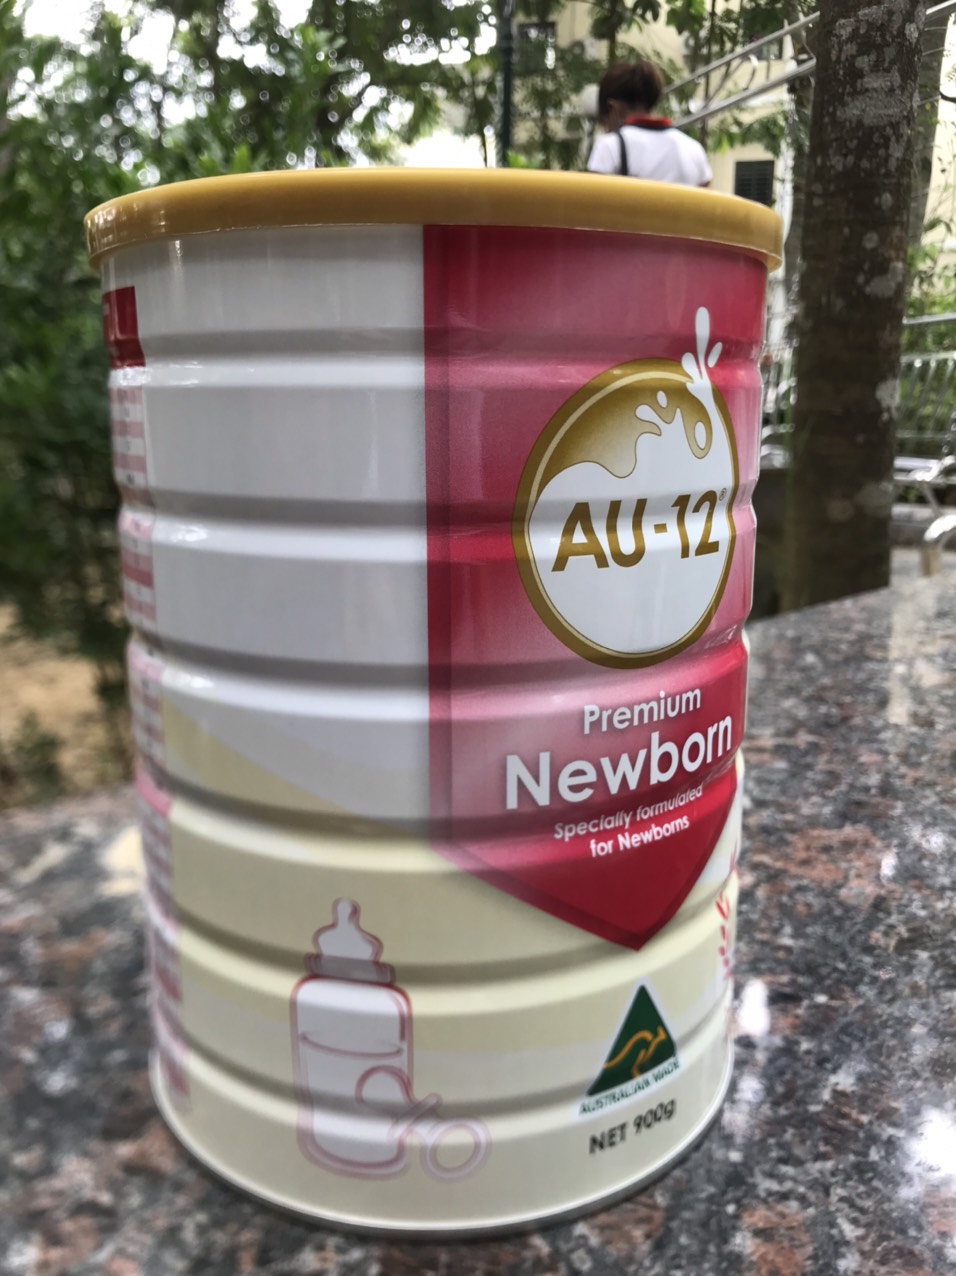 Sữa bột AU-12  Premium Newborn Infant Formula 0-6 months